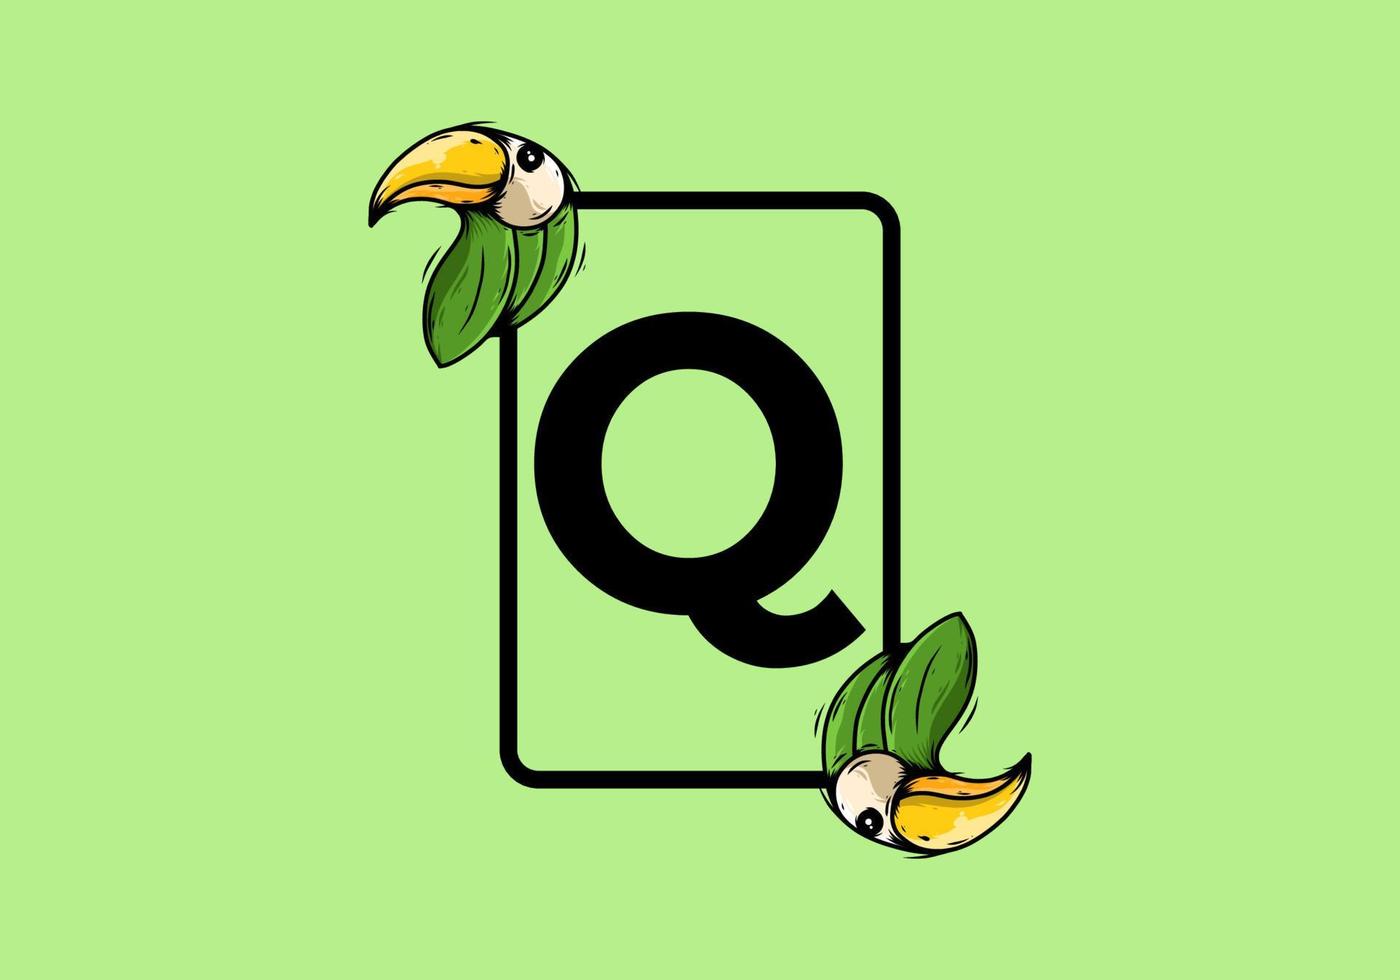 grüner vogel mit q anfangsbuchstabe vektor